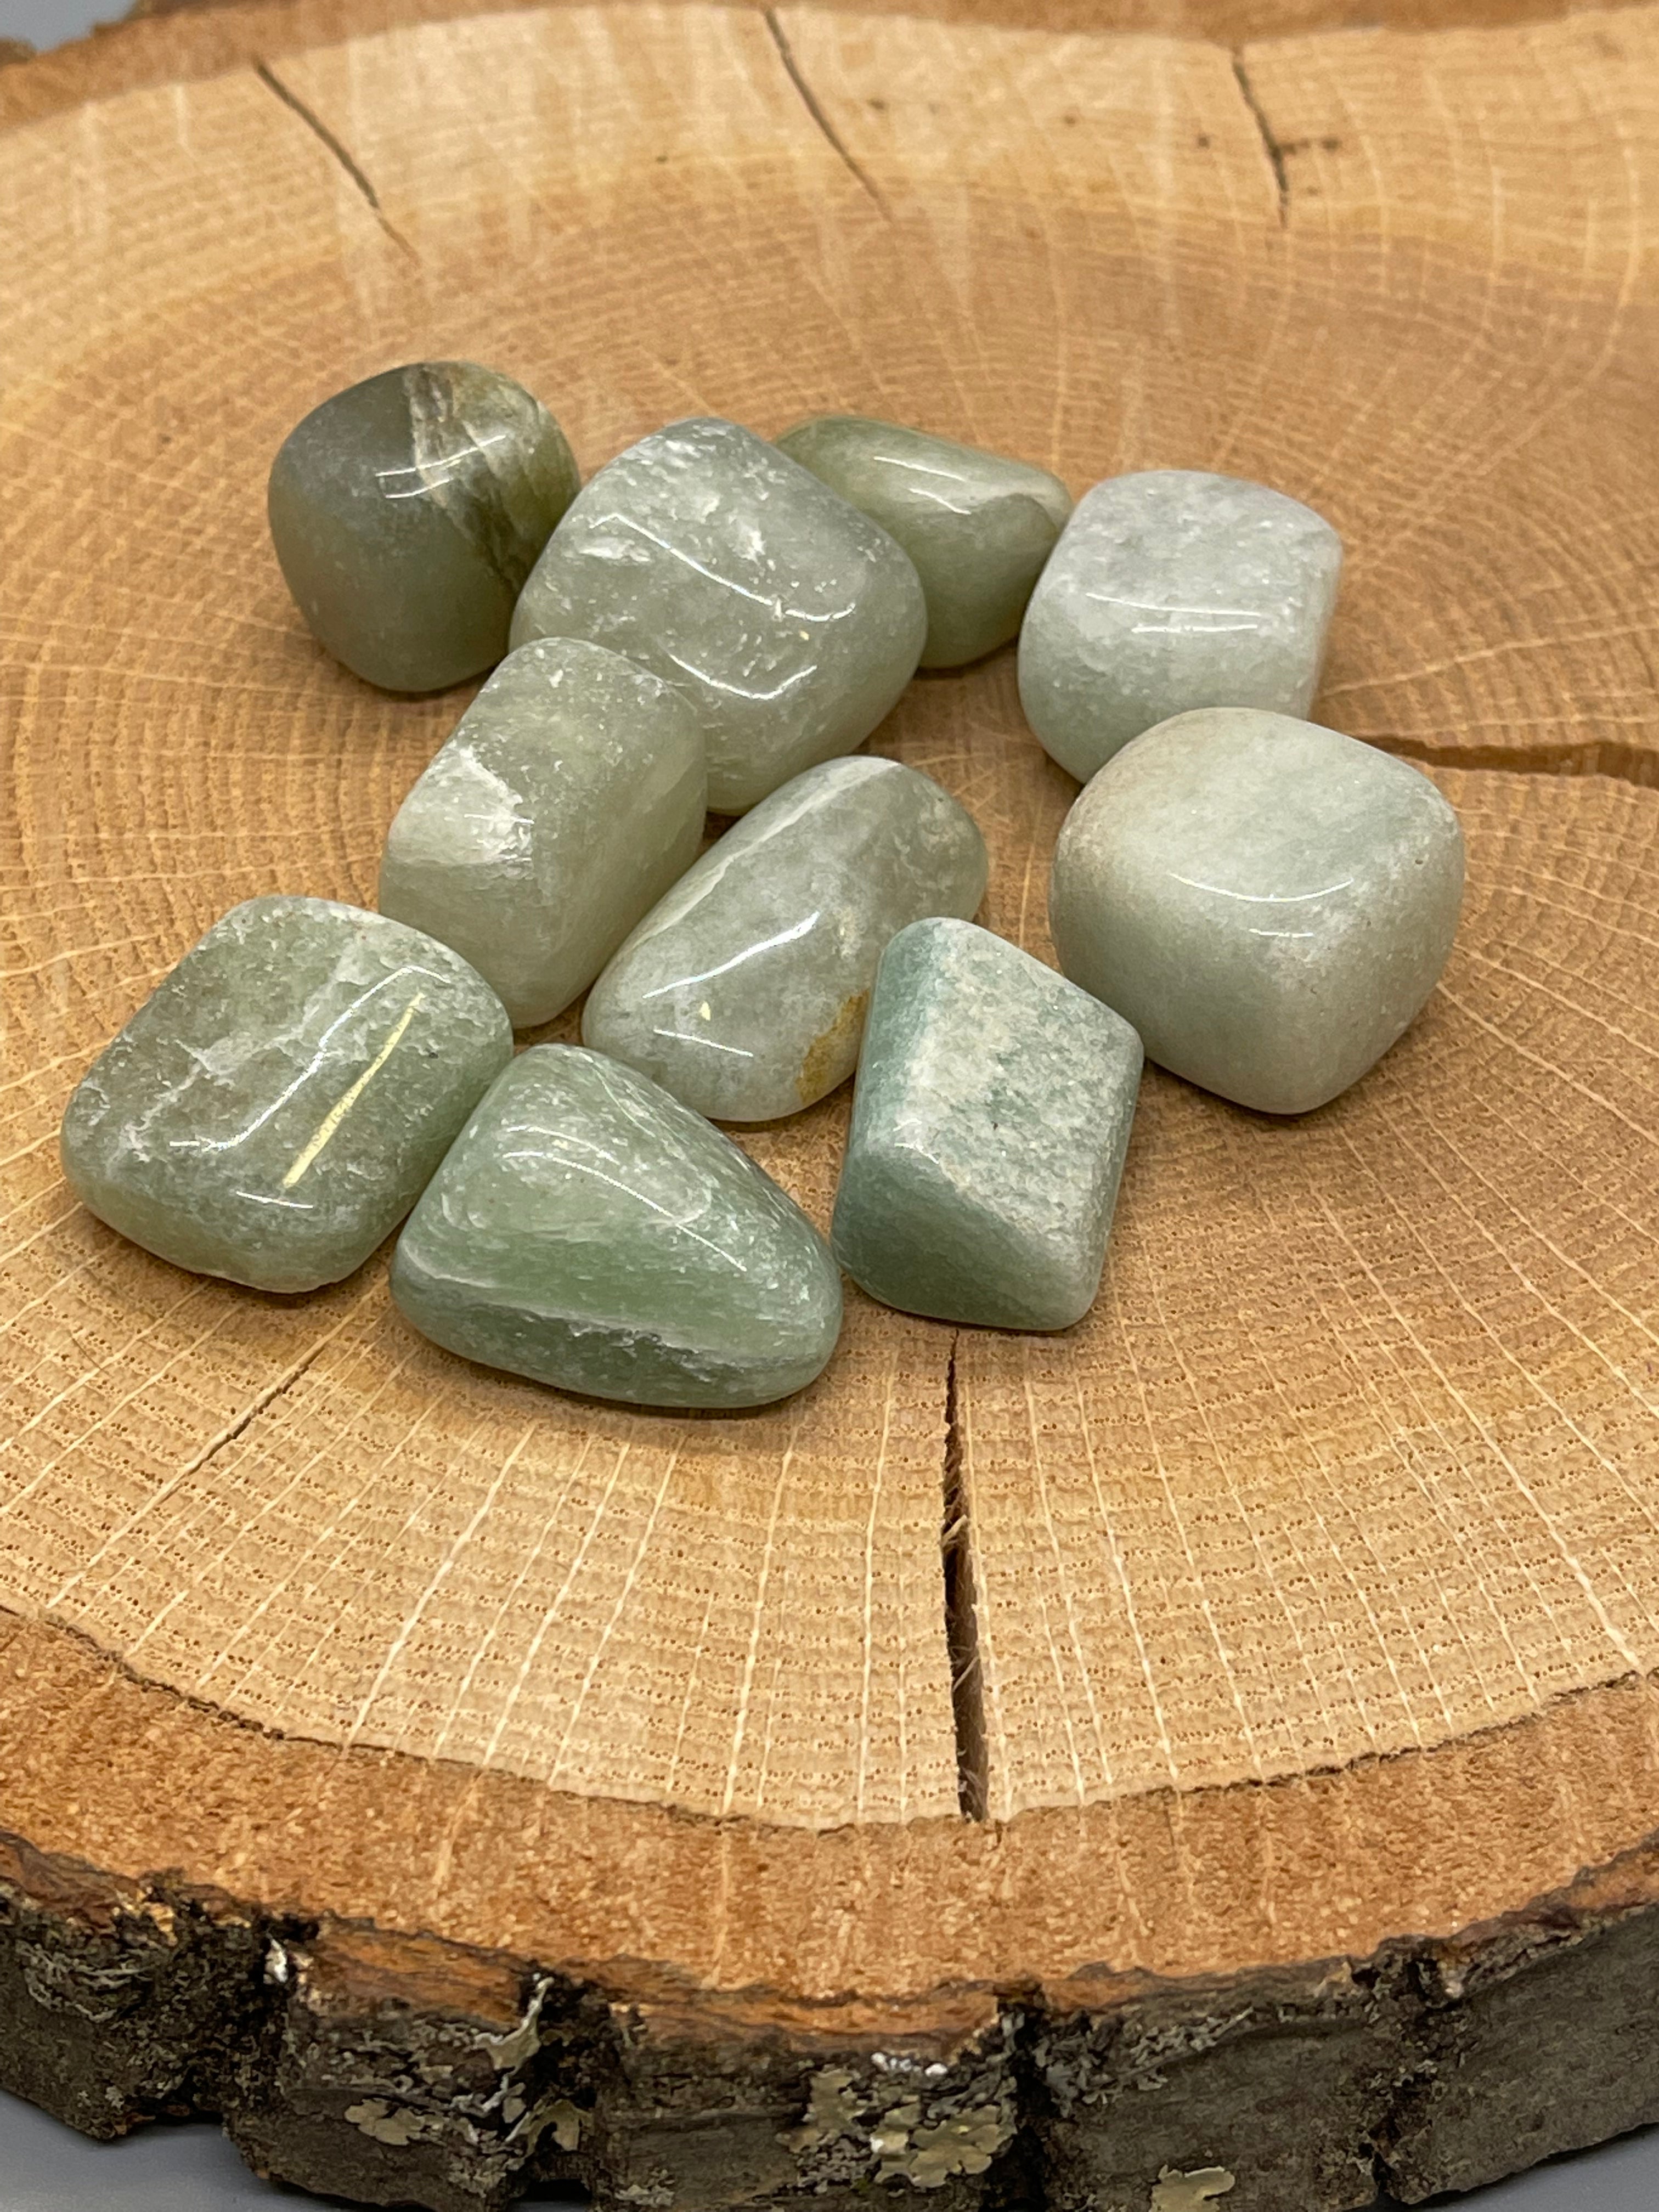 Green Aventurine Tumble Stone